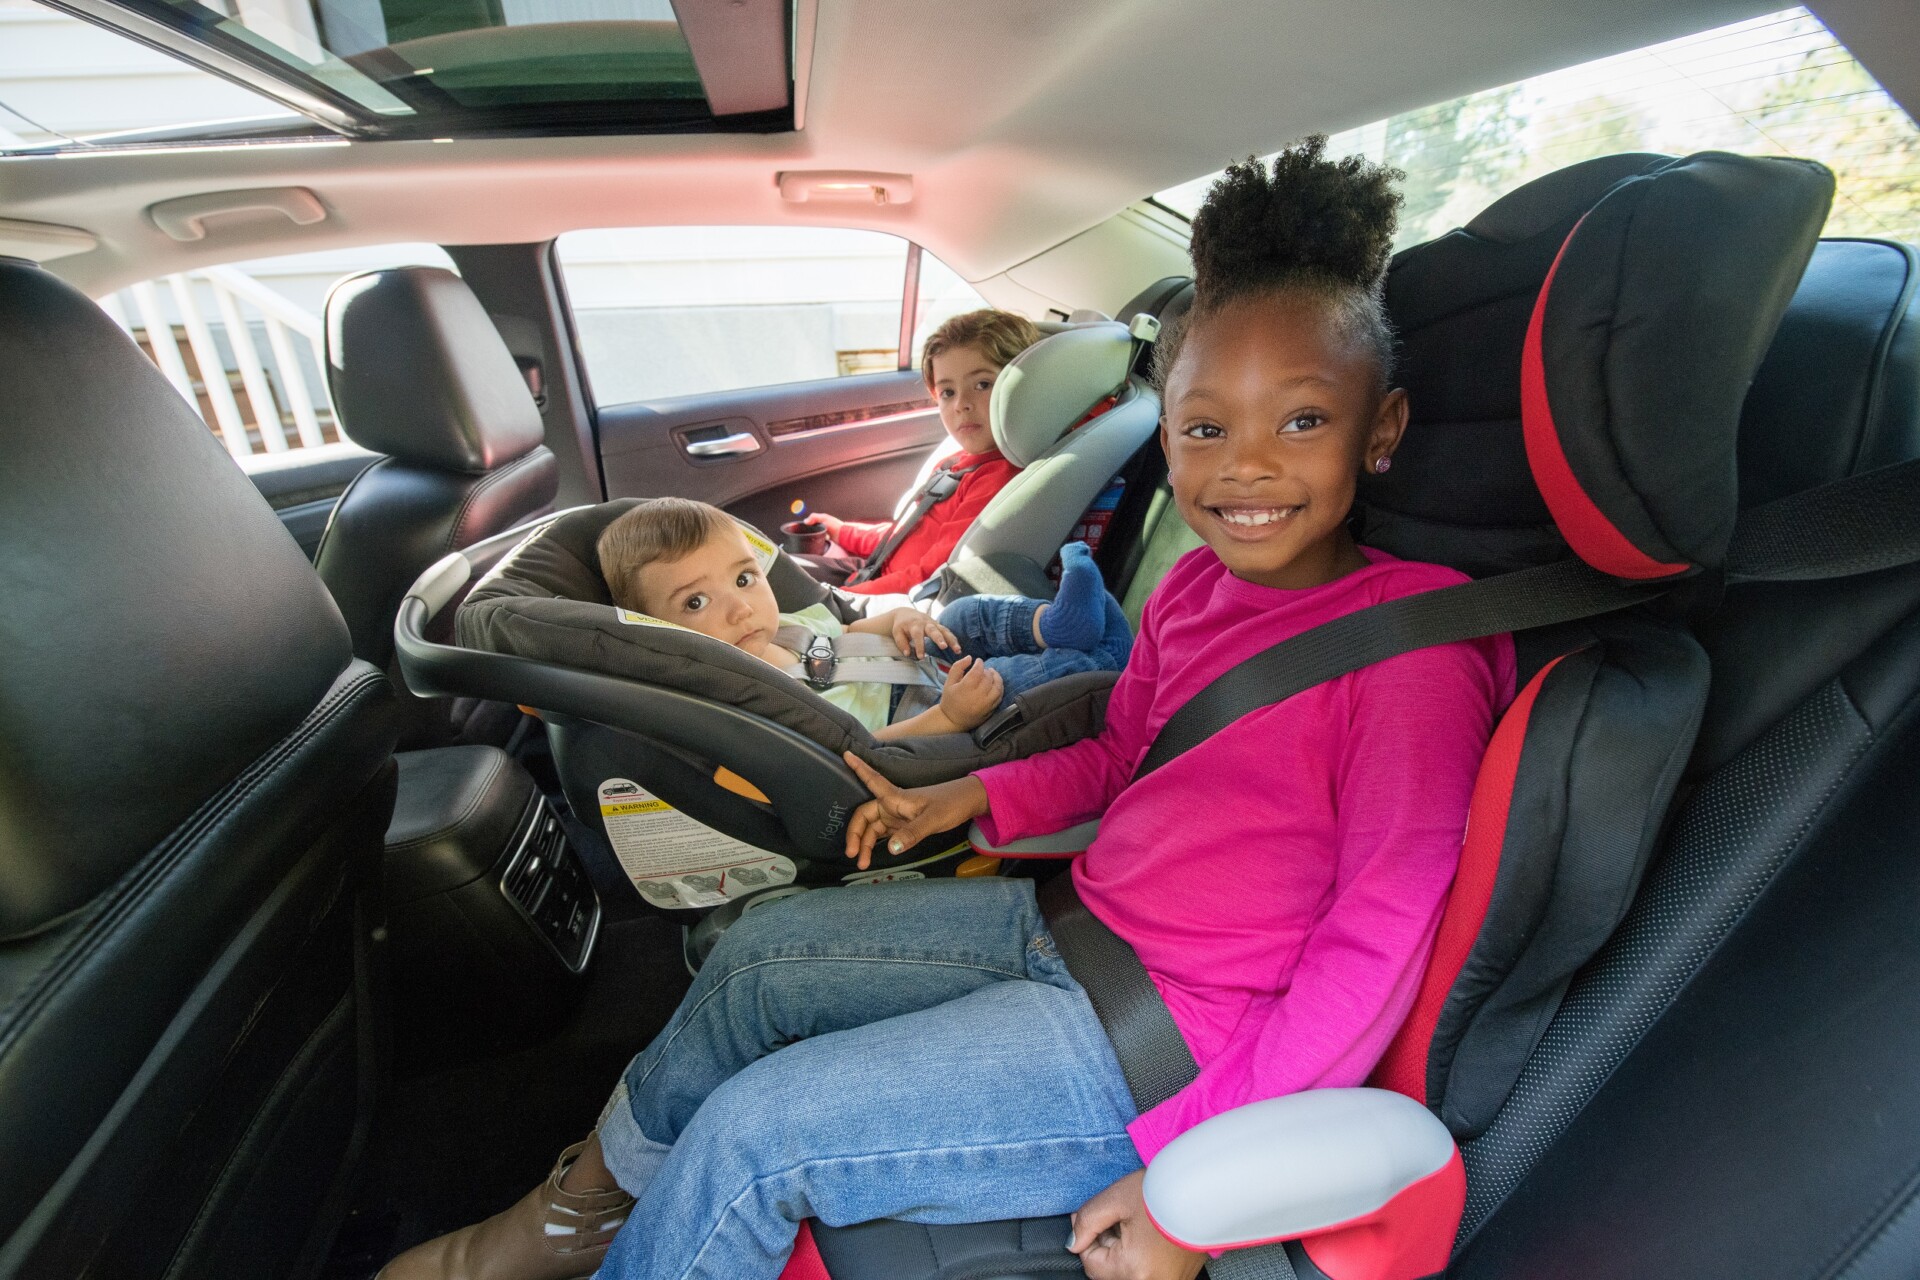 Graco SlimFit car seat review - Car seats from birth - Car Seats